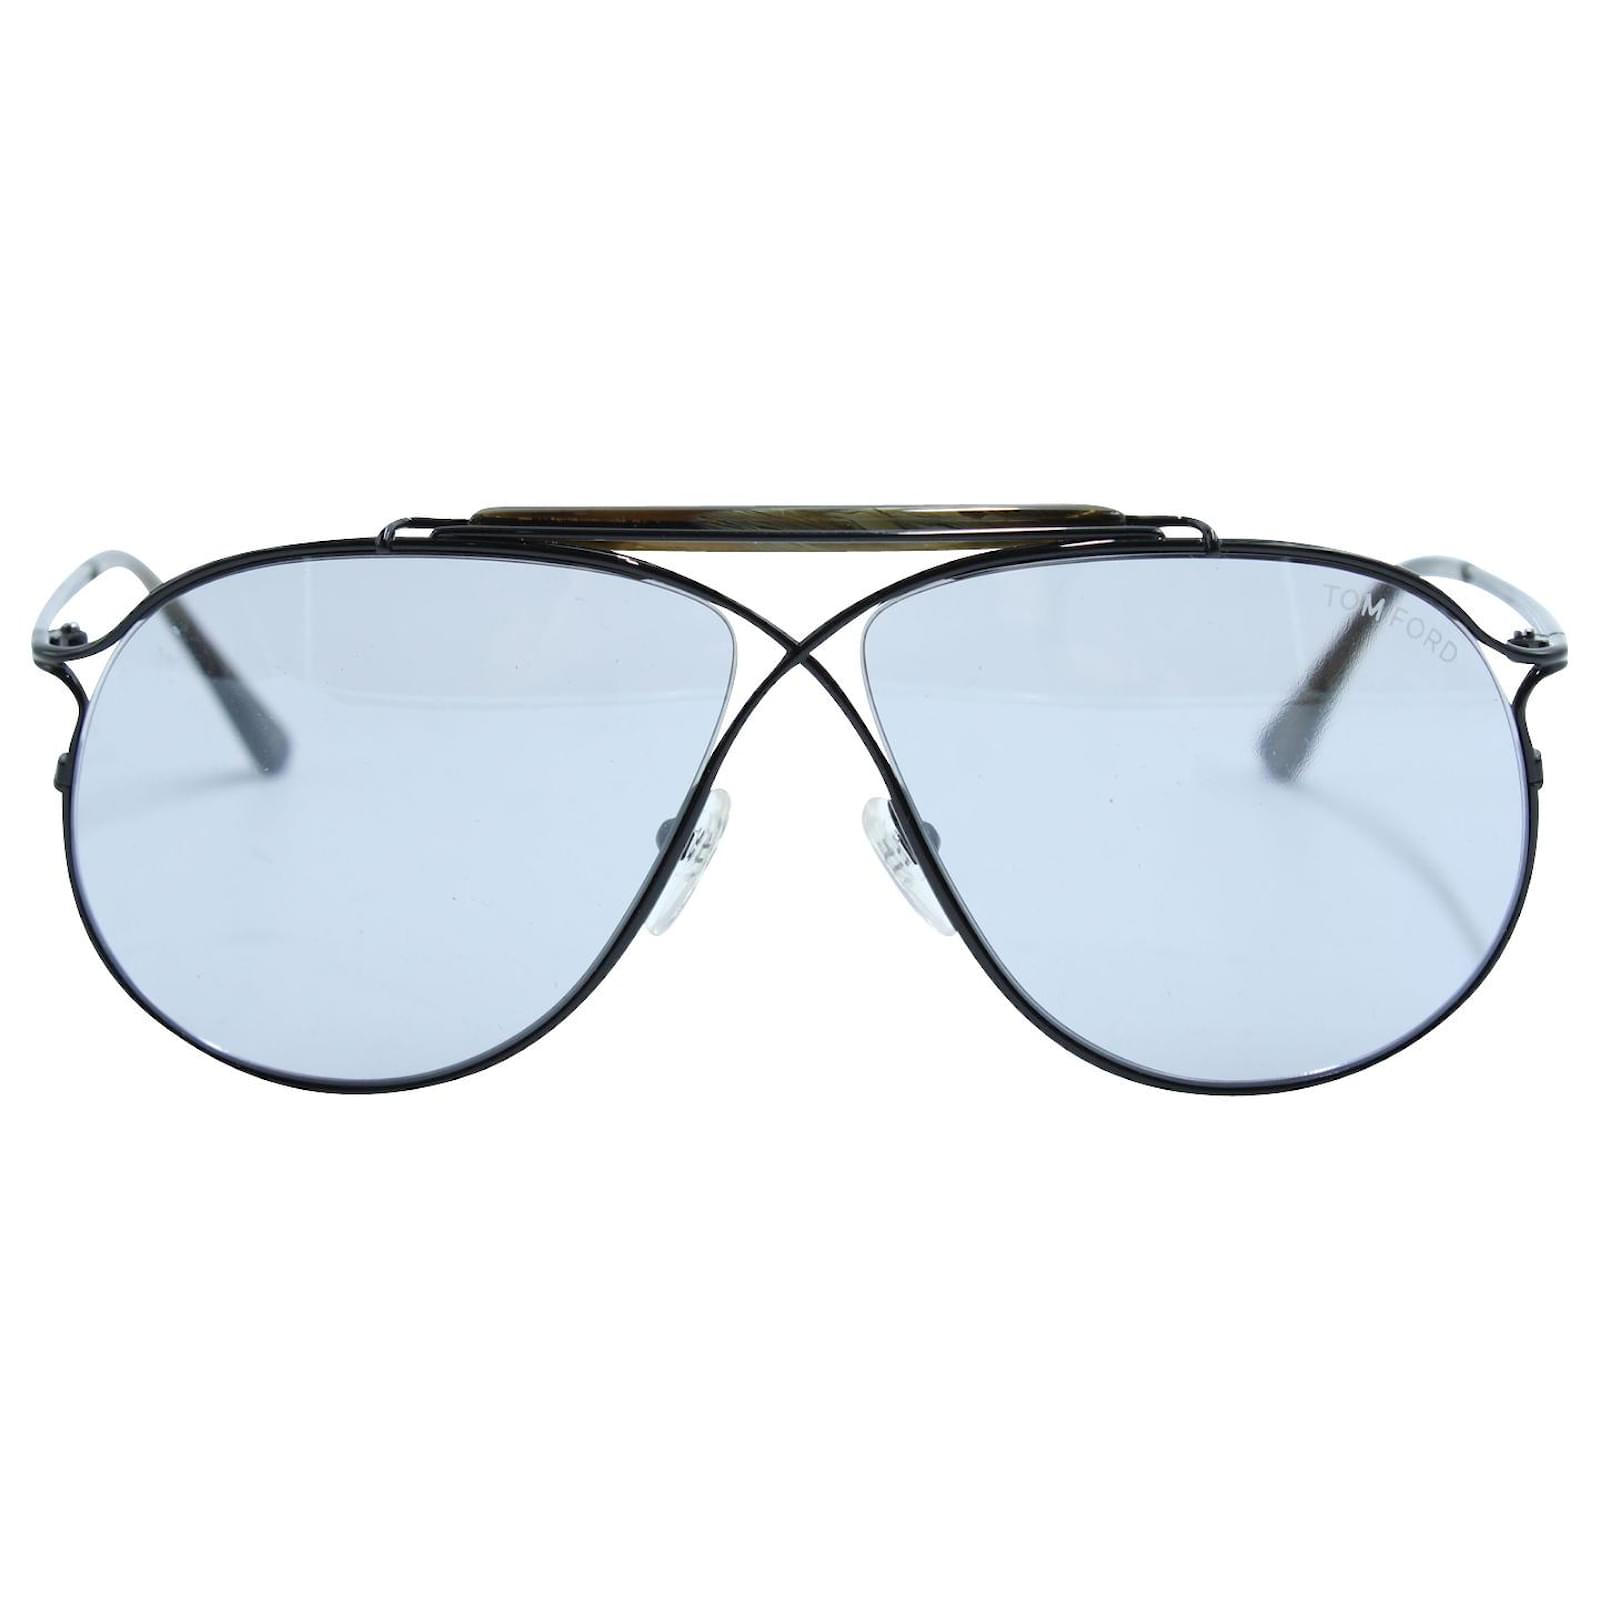 Tom Ford - Tom N.6 Sunglasses - Aviator Sunglasses - Black